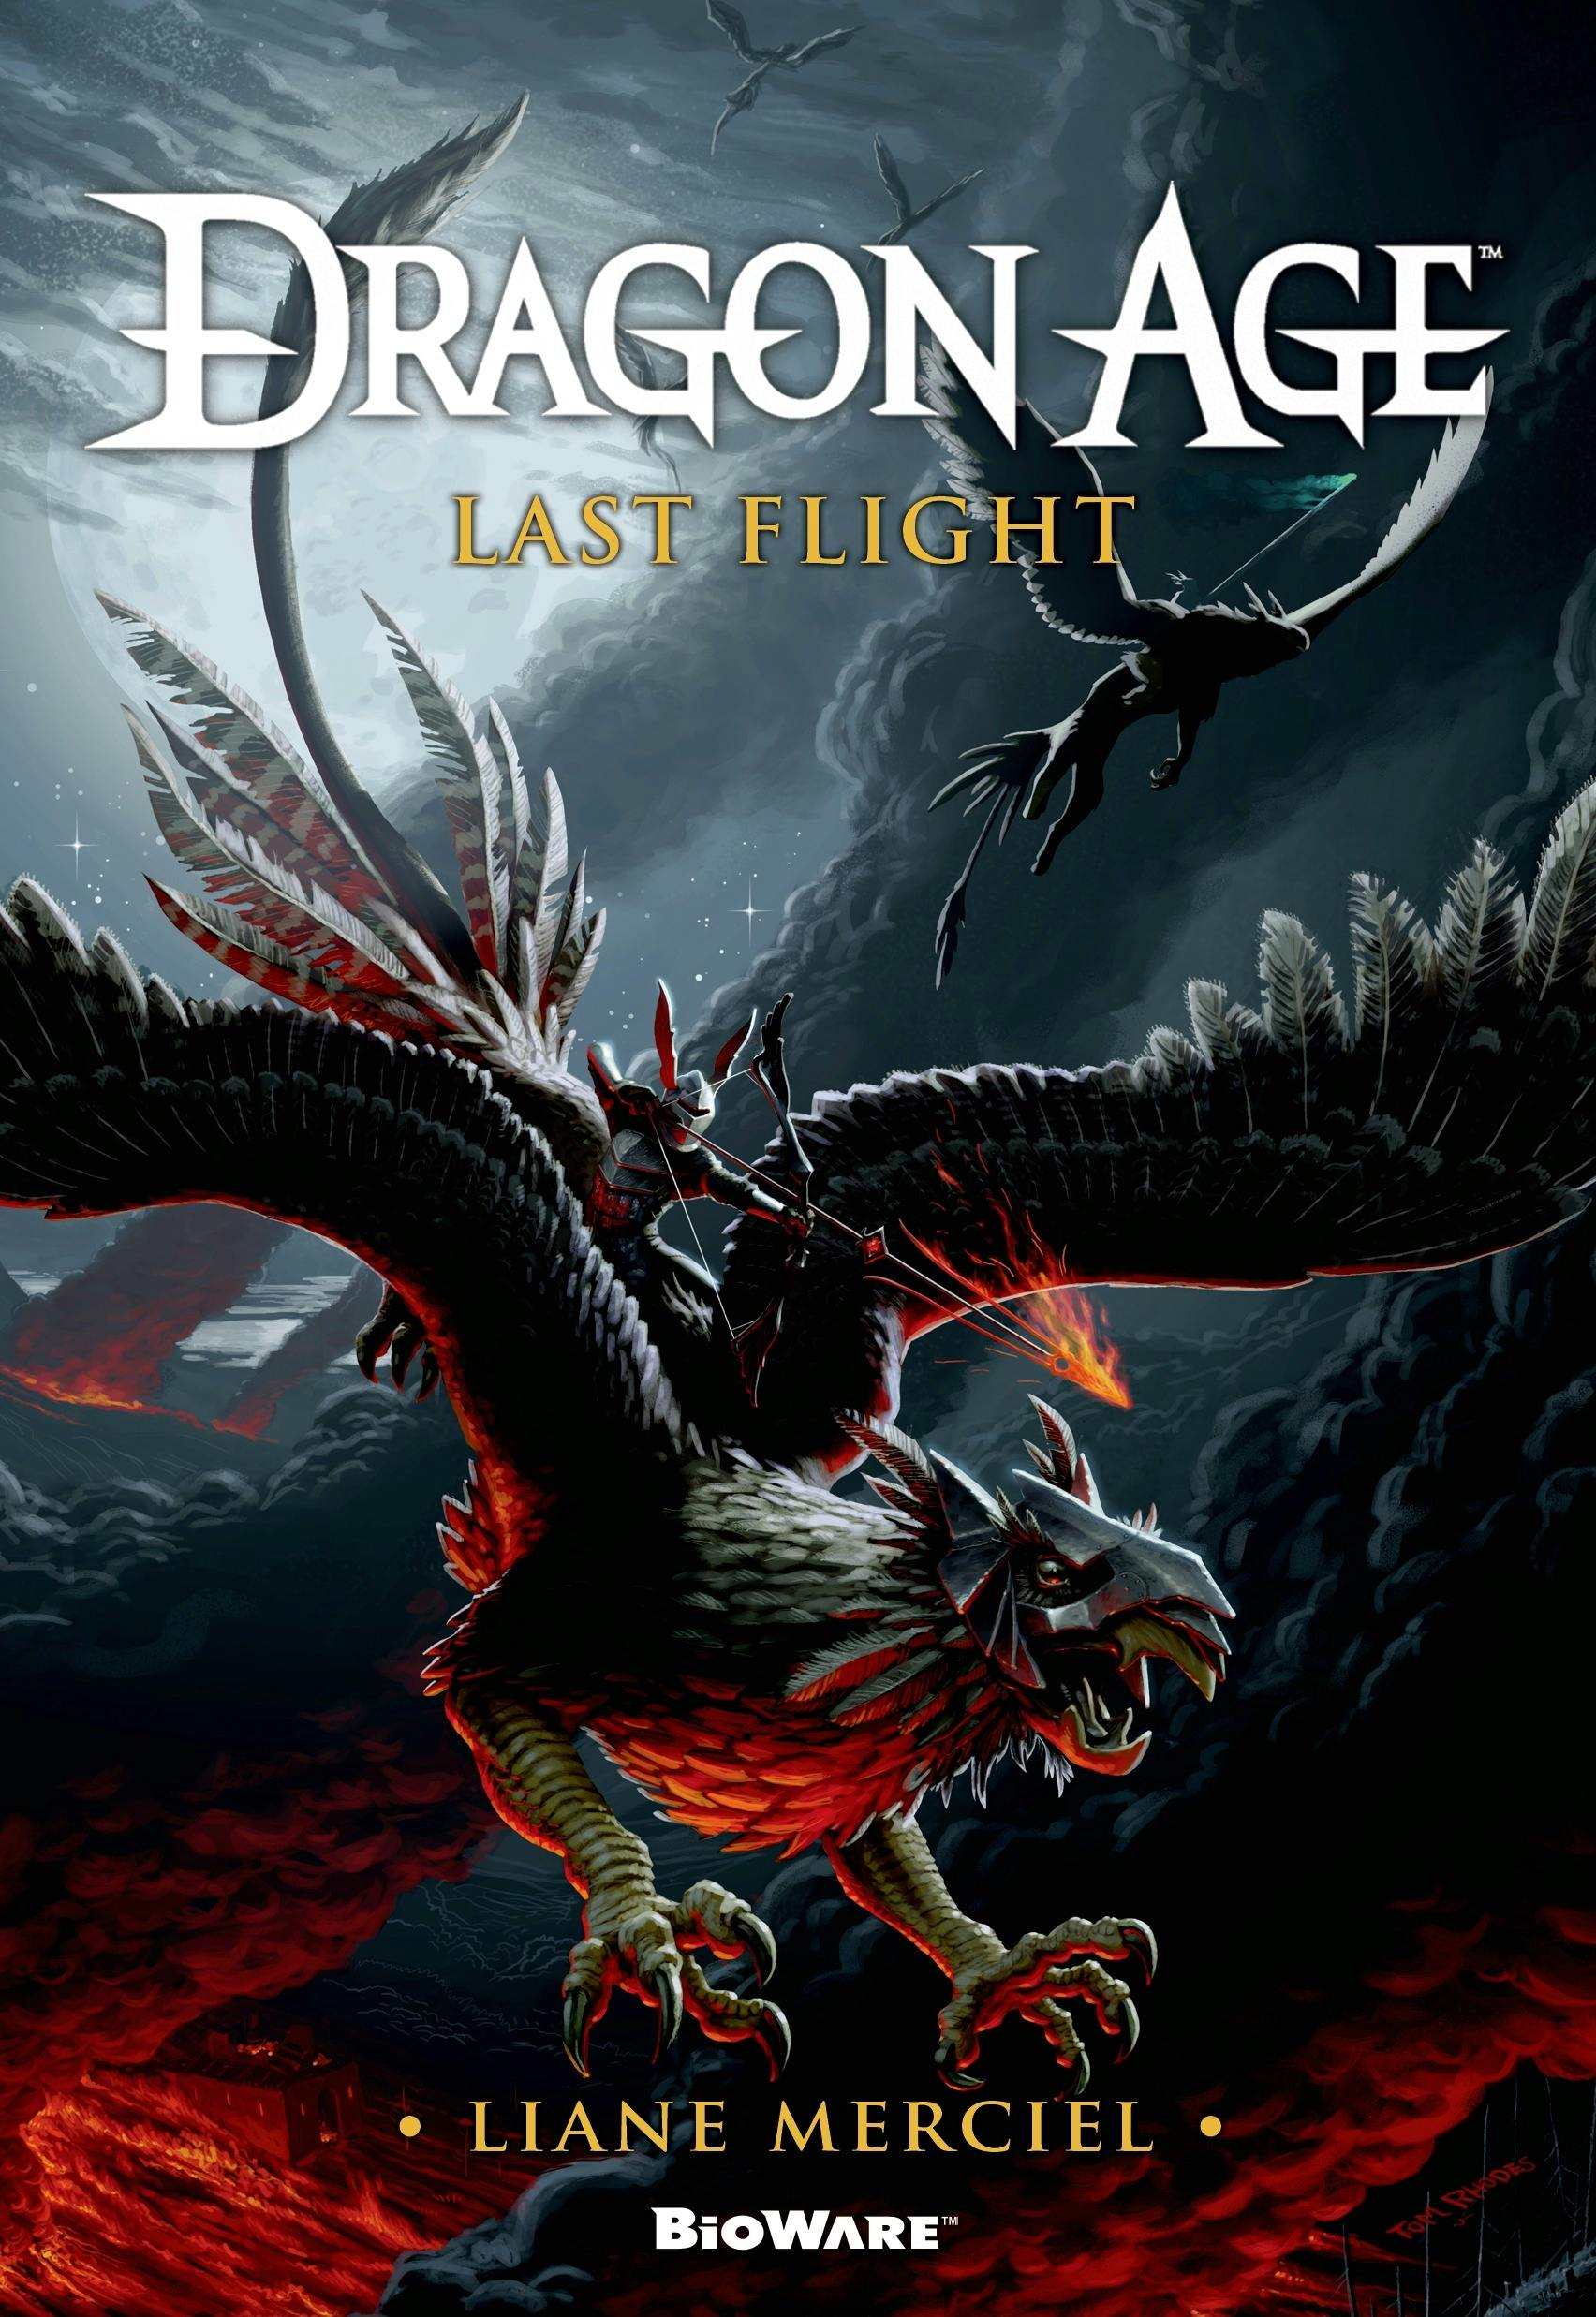 Dragon Age Journeys, Dragon Age Wiki